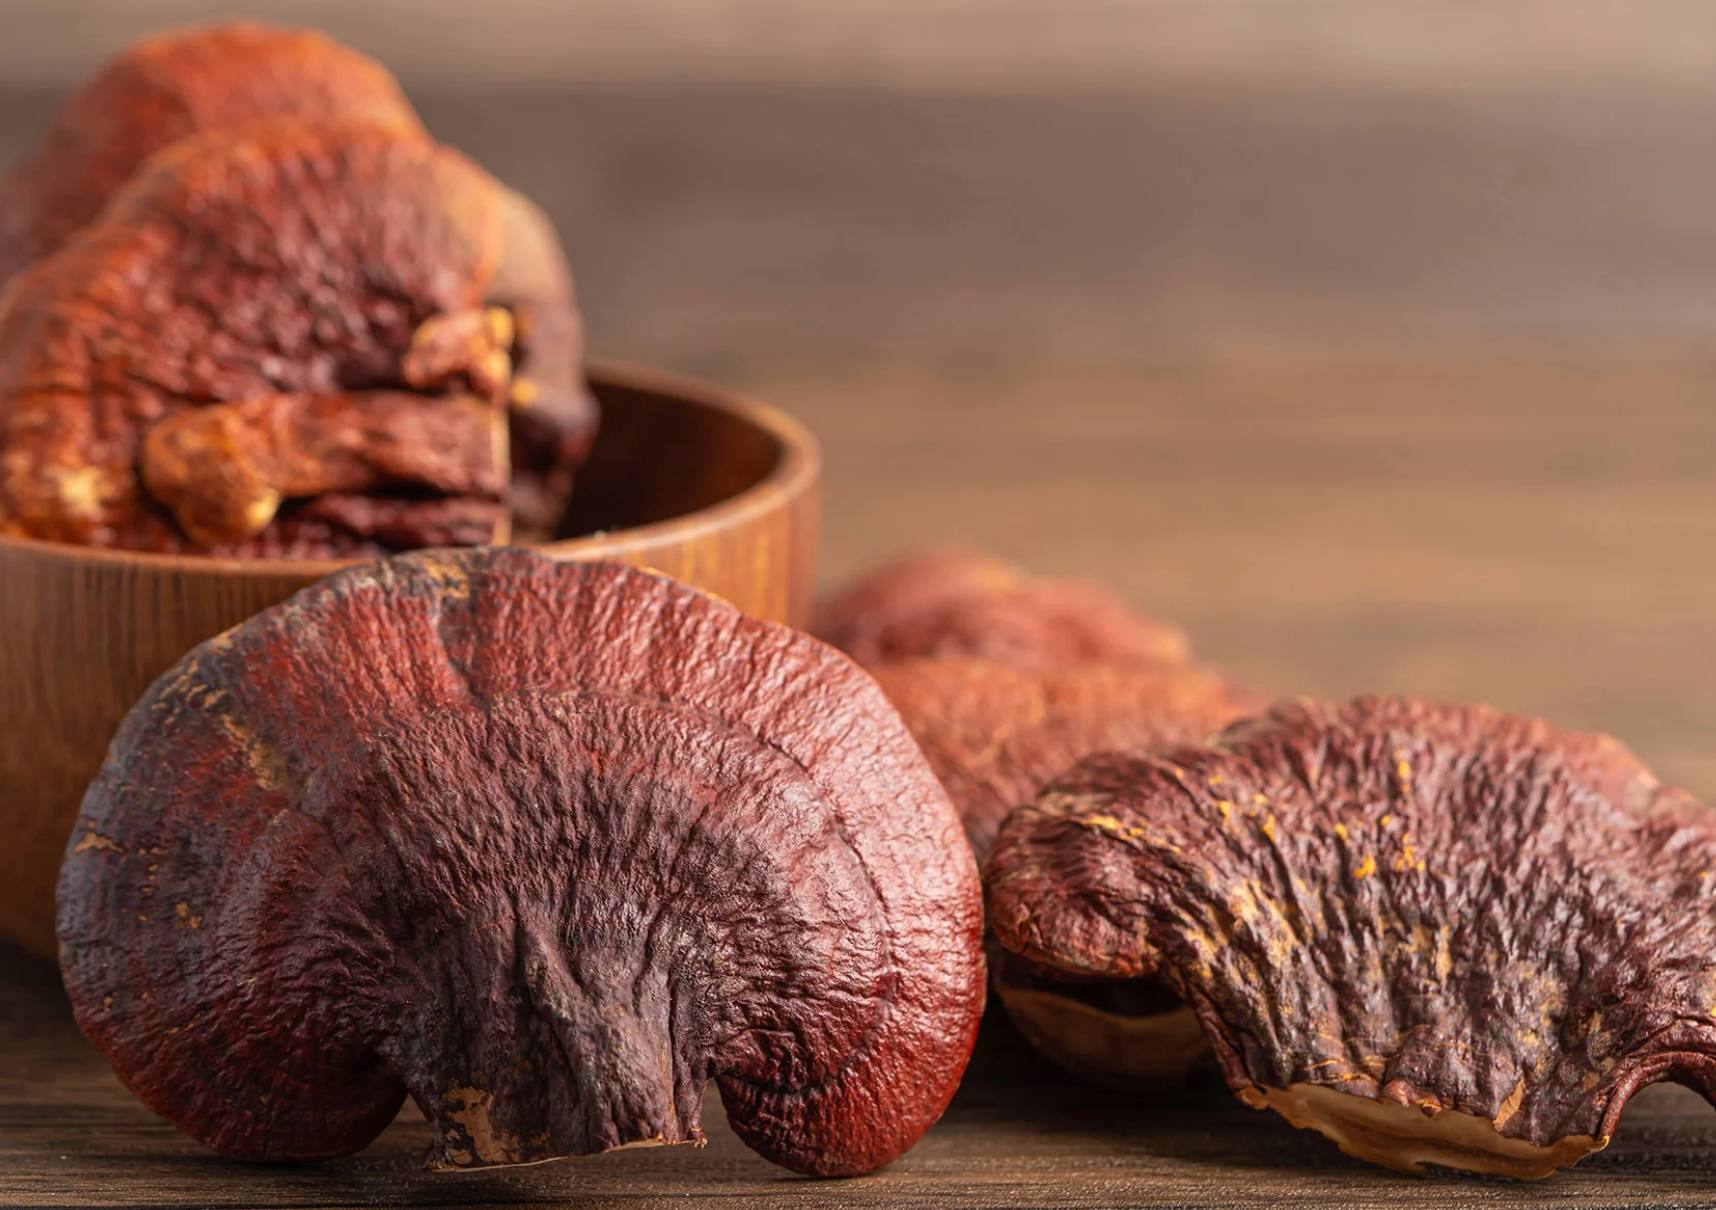 10 Surprising Health Benefits of Reishi Mushrooms